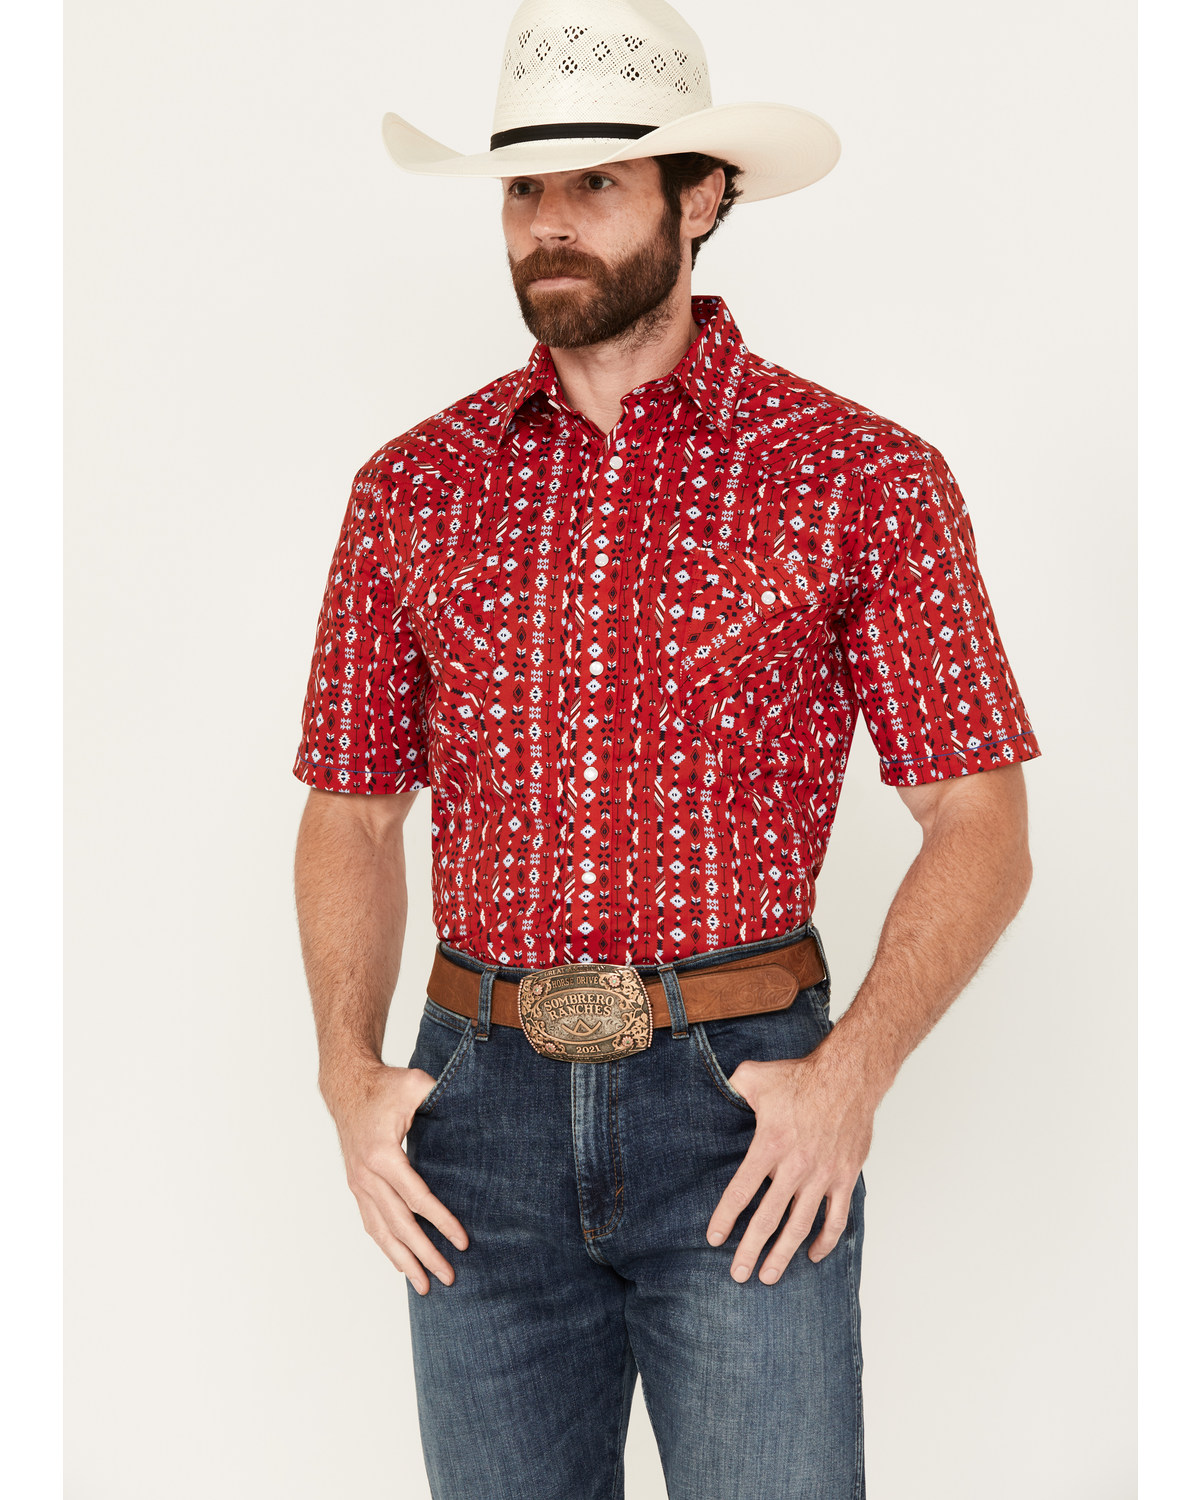 Rough Stock by Panhandle Men's Southwestern Print Short Sleeve Pearl Snap Western Shirt